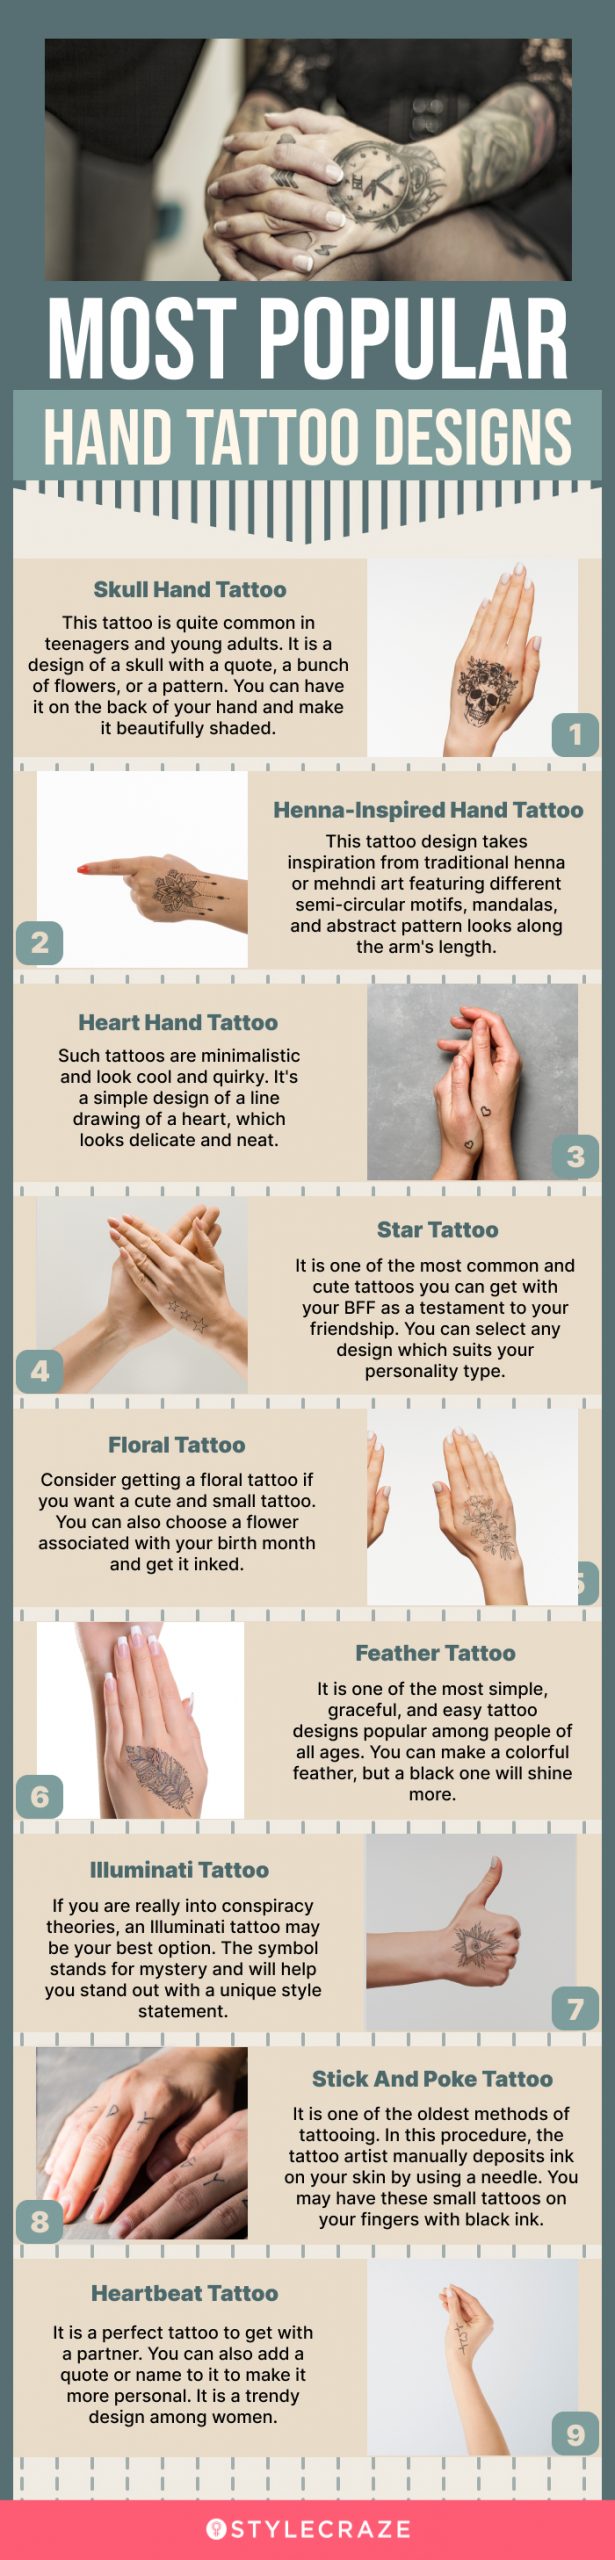 most popular hand tattoo designs (infographic)